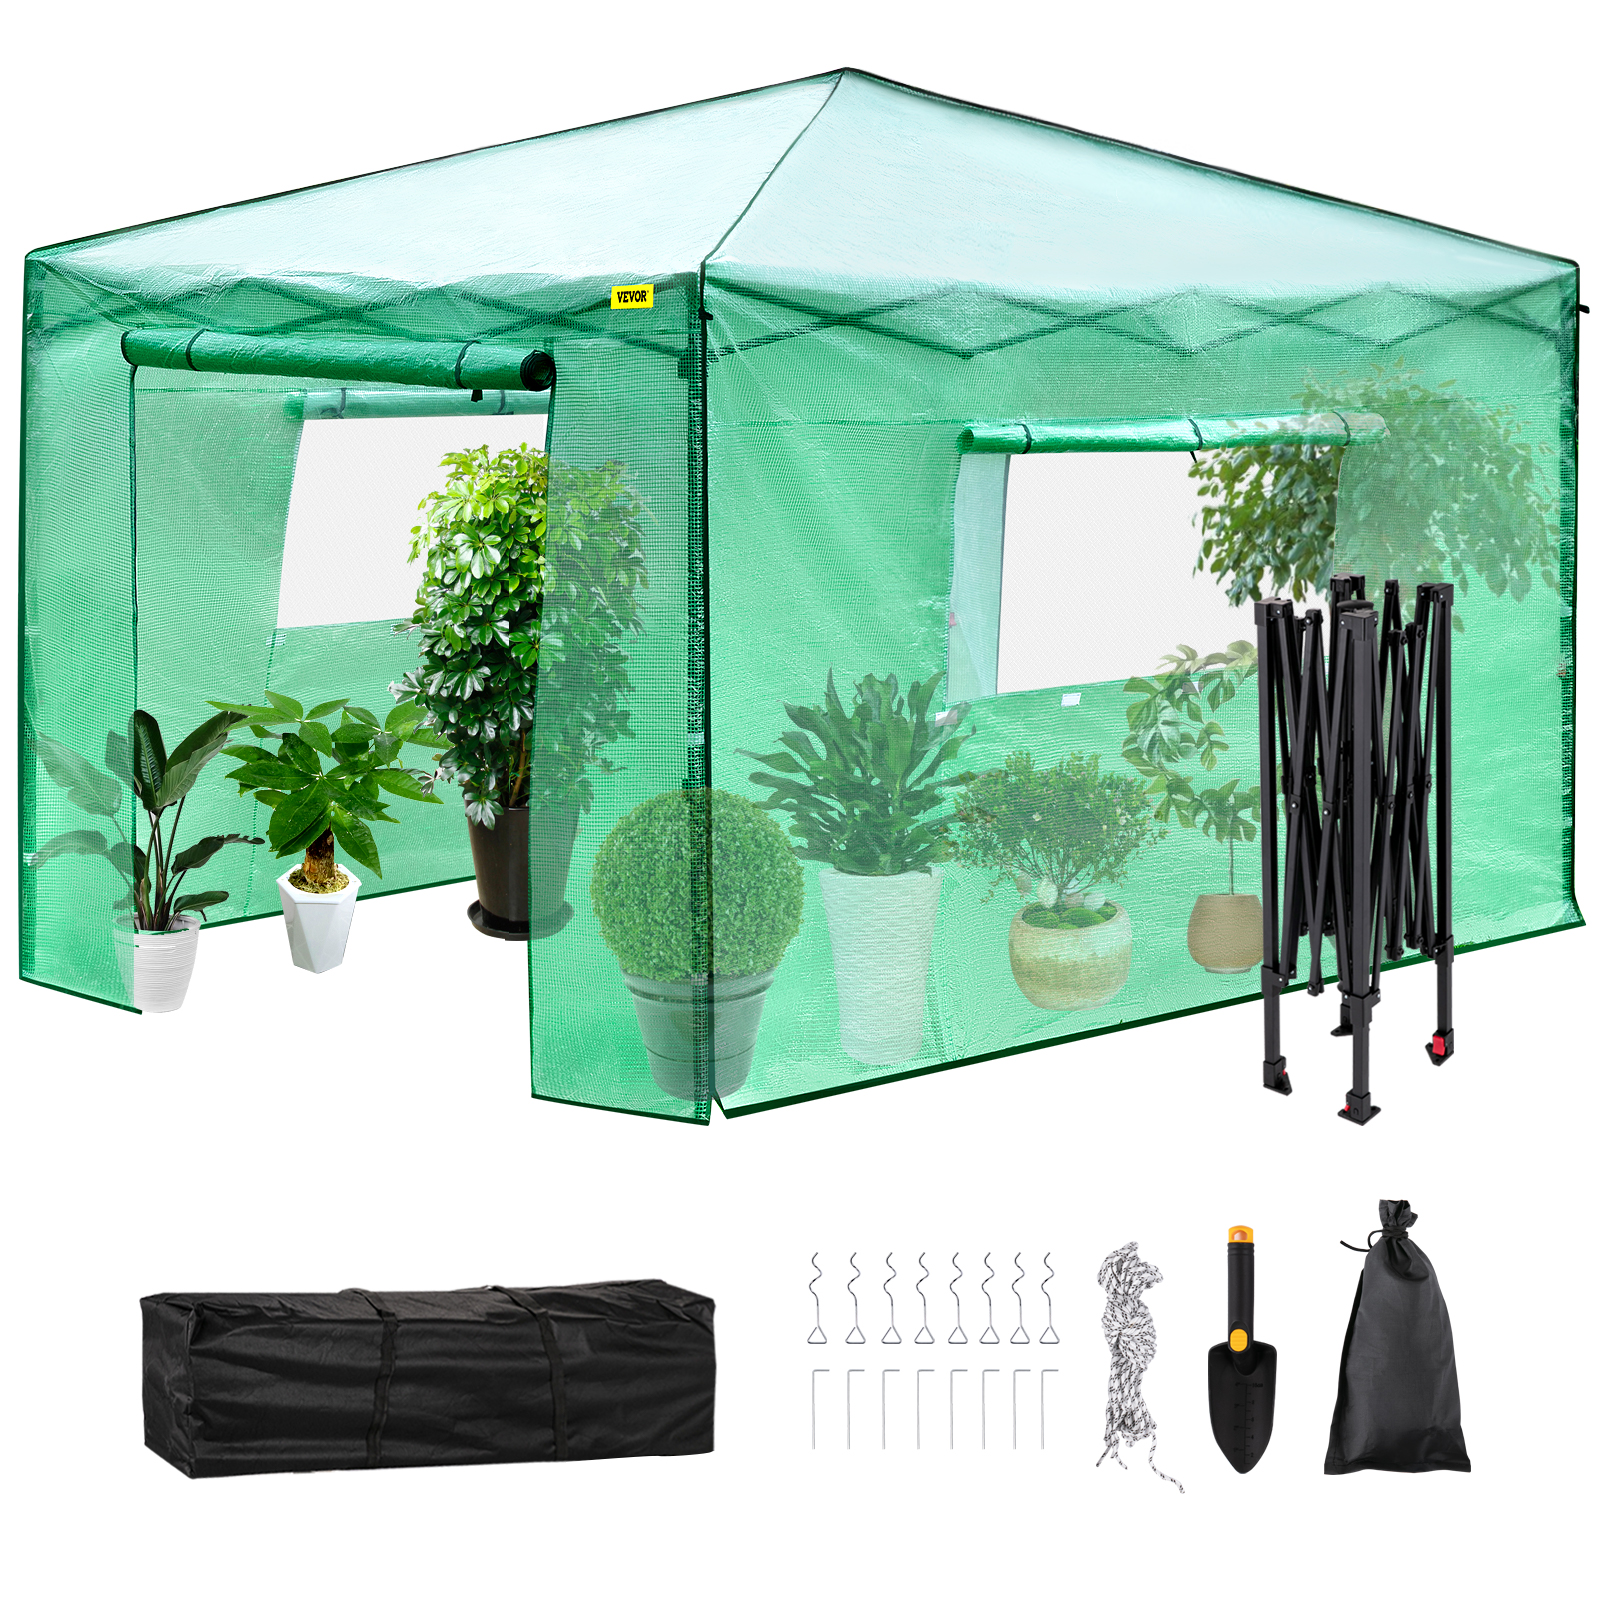 walk-in greenhouse,8x6FT,pop-up design